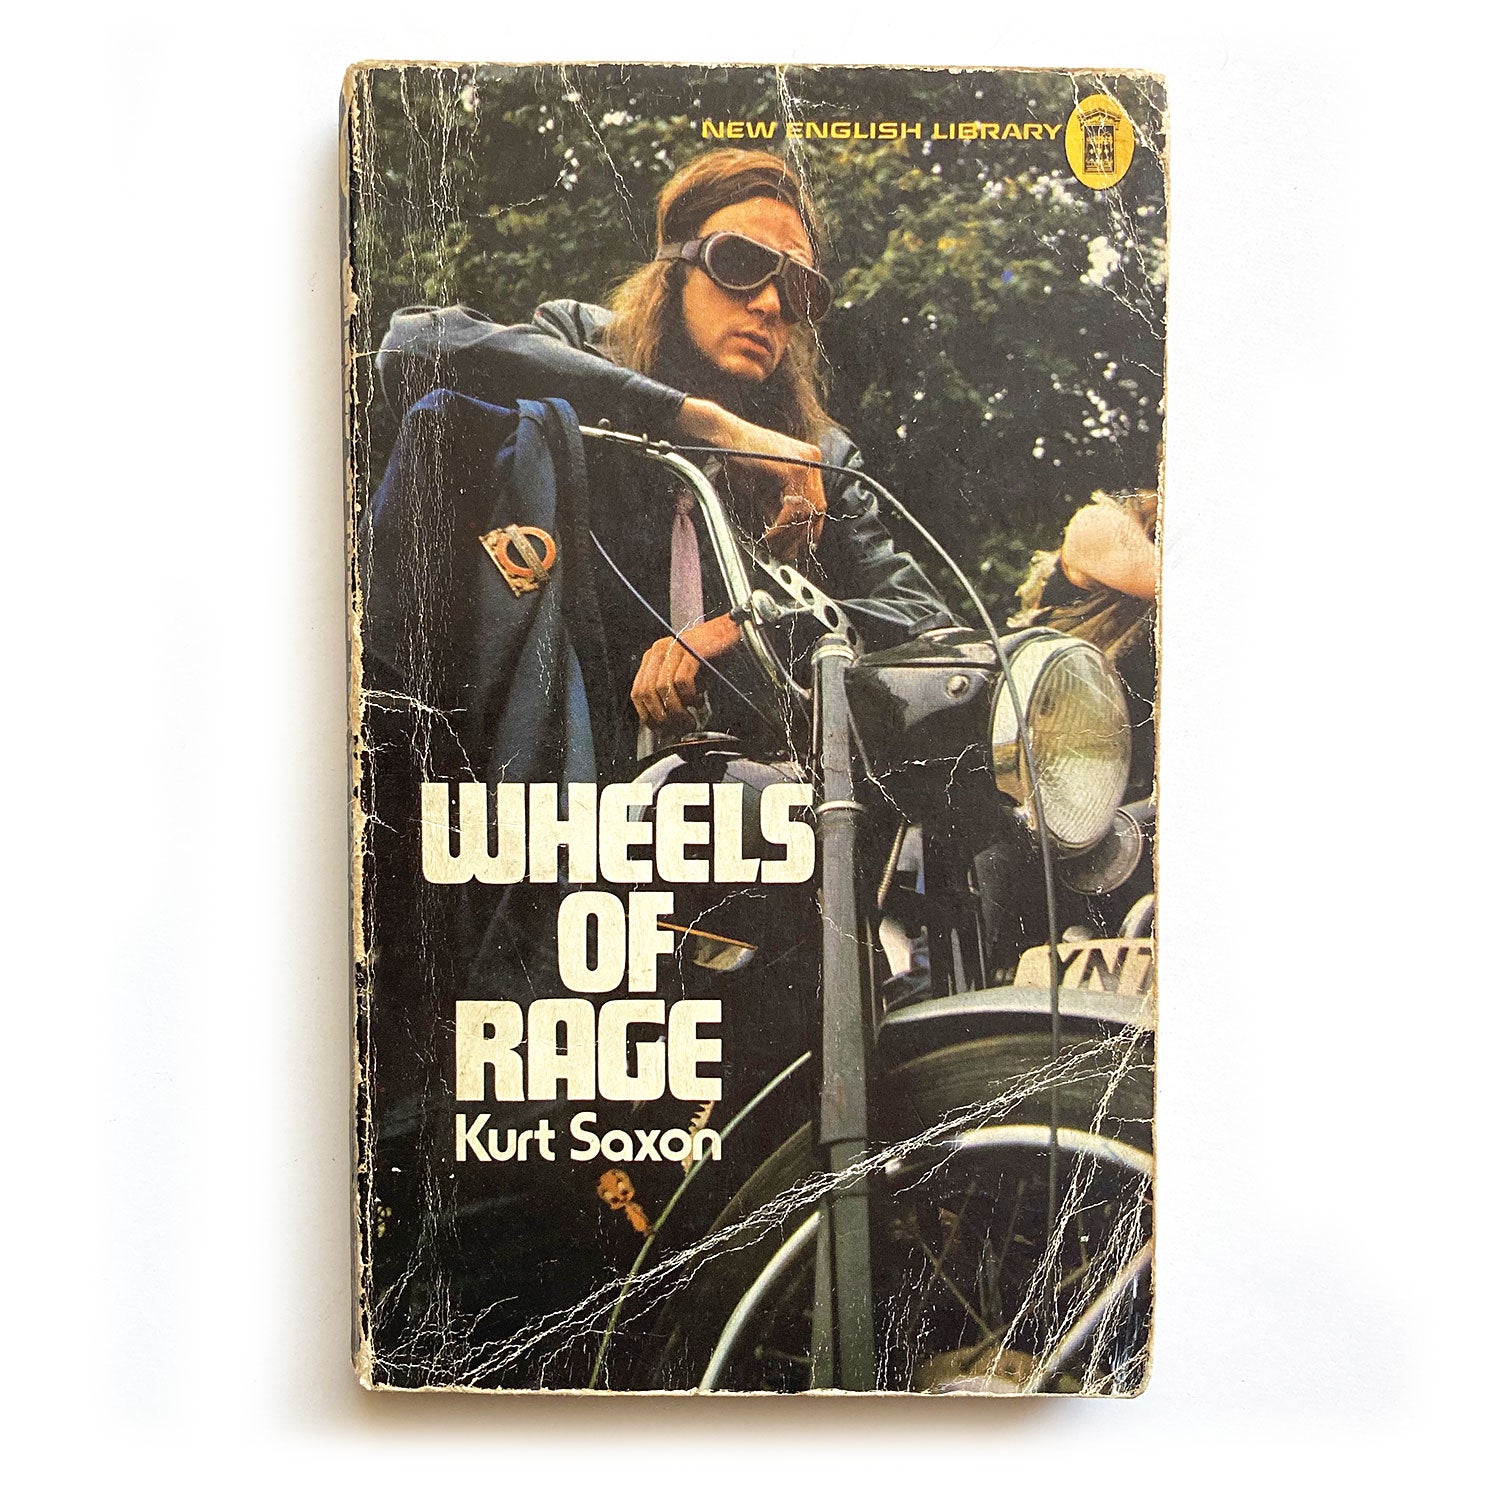 Wheels of Rage by Kurt Saxon, New English Library paperback, 1974